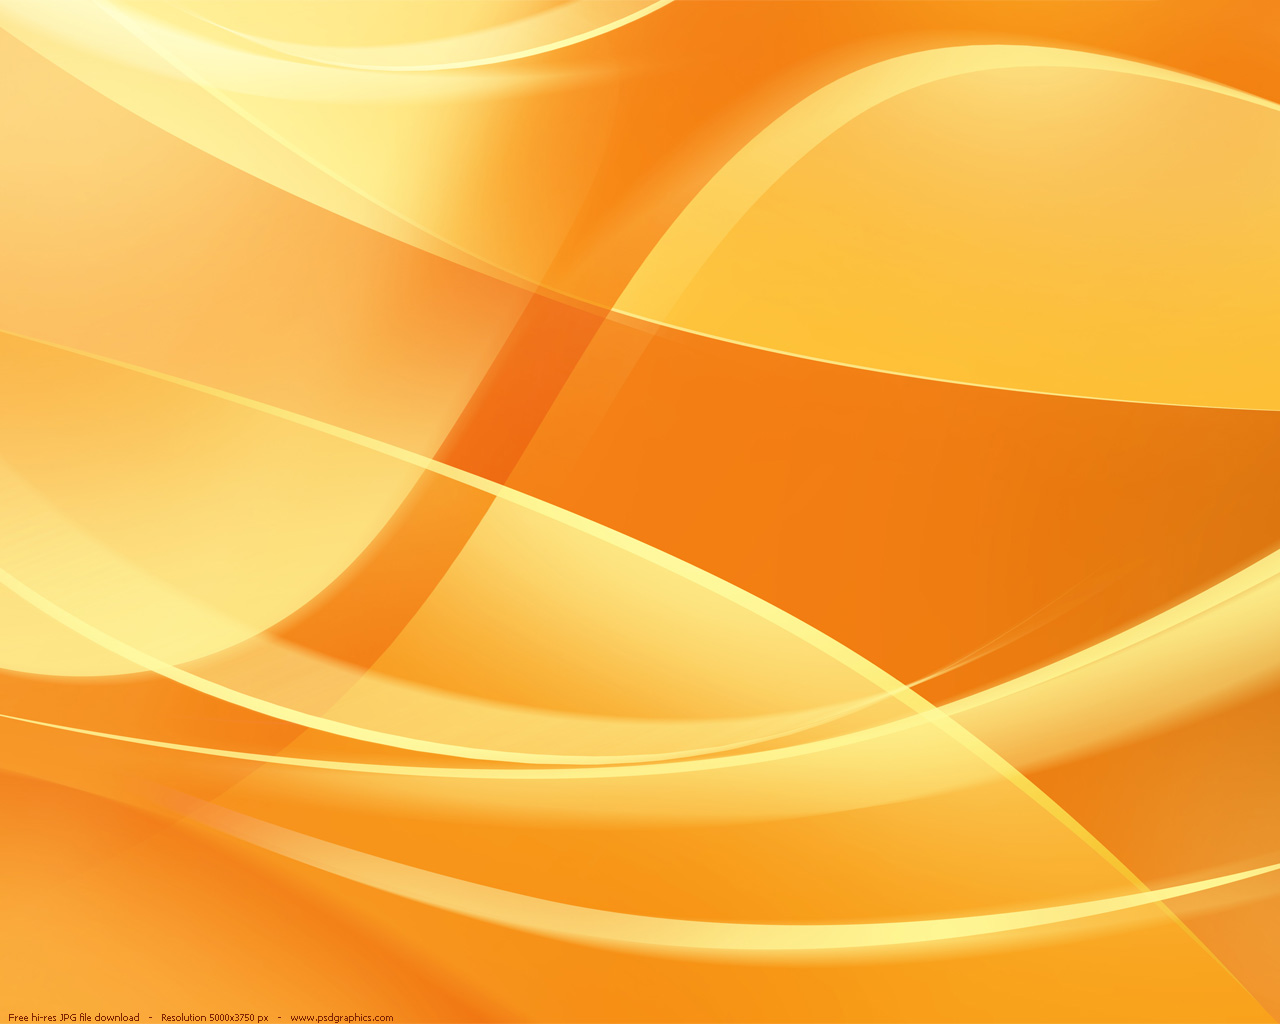 Abstract Orange Background Psdgraphics